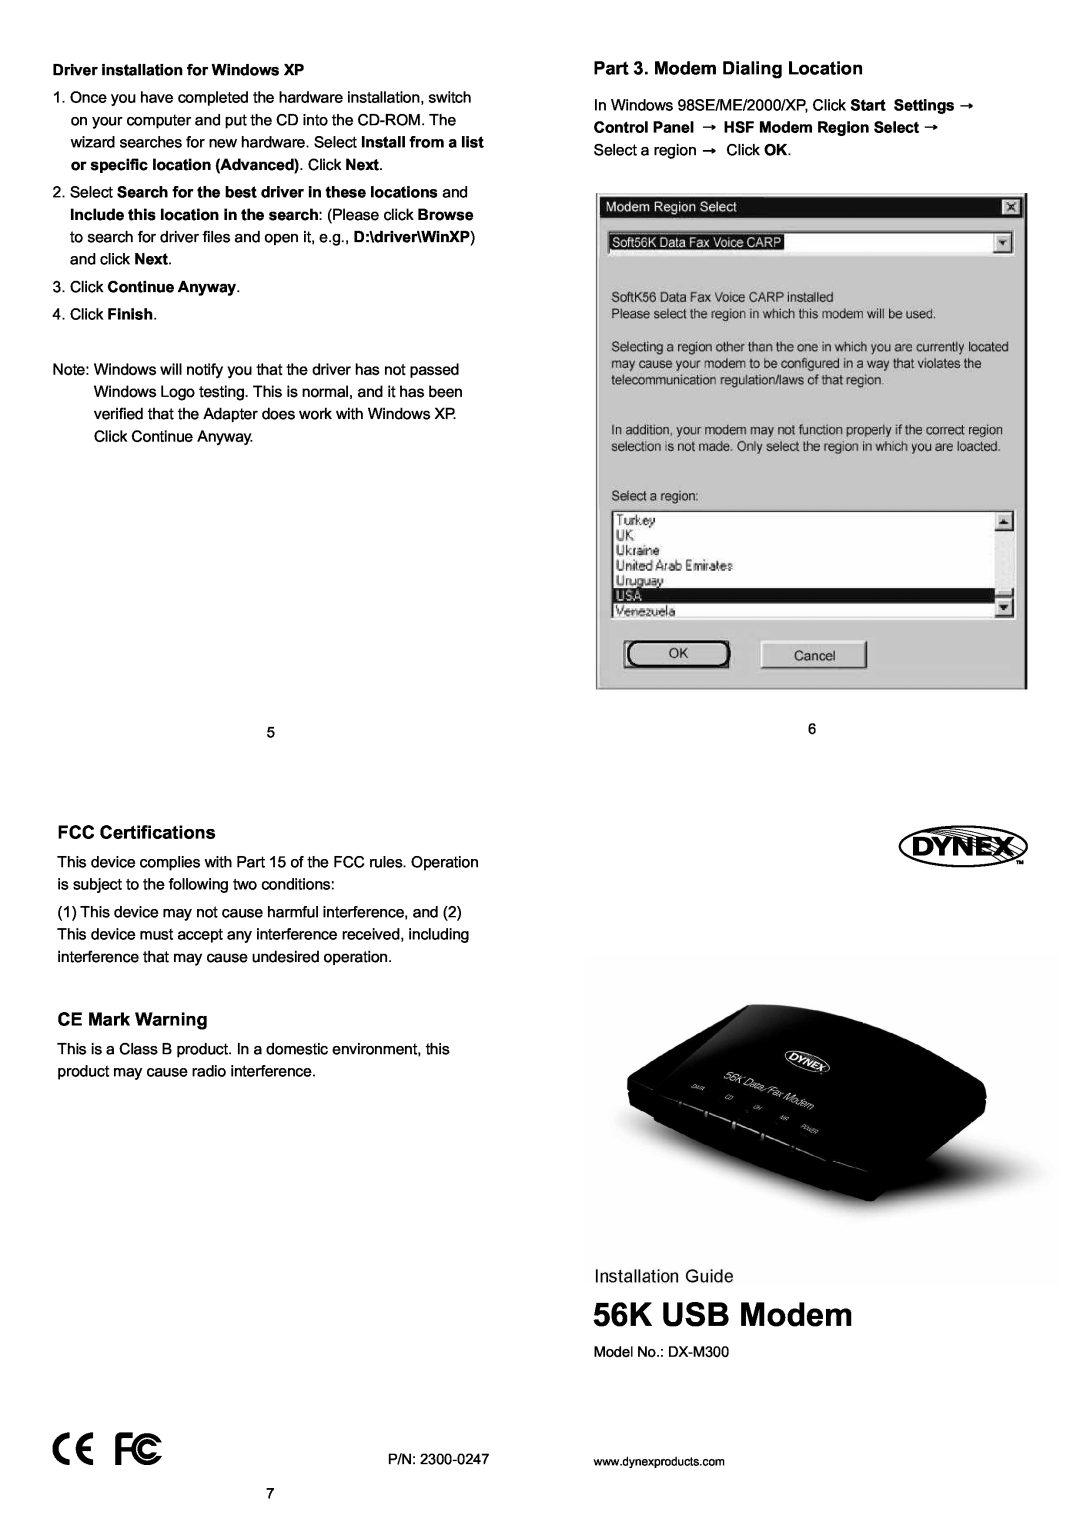 Dynex 2300-0247, DX-M300 manual FCC Certifications, CE Mark Warning, Part 3. Modem Dialing Location, 56K USB Modem 